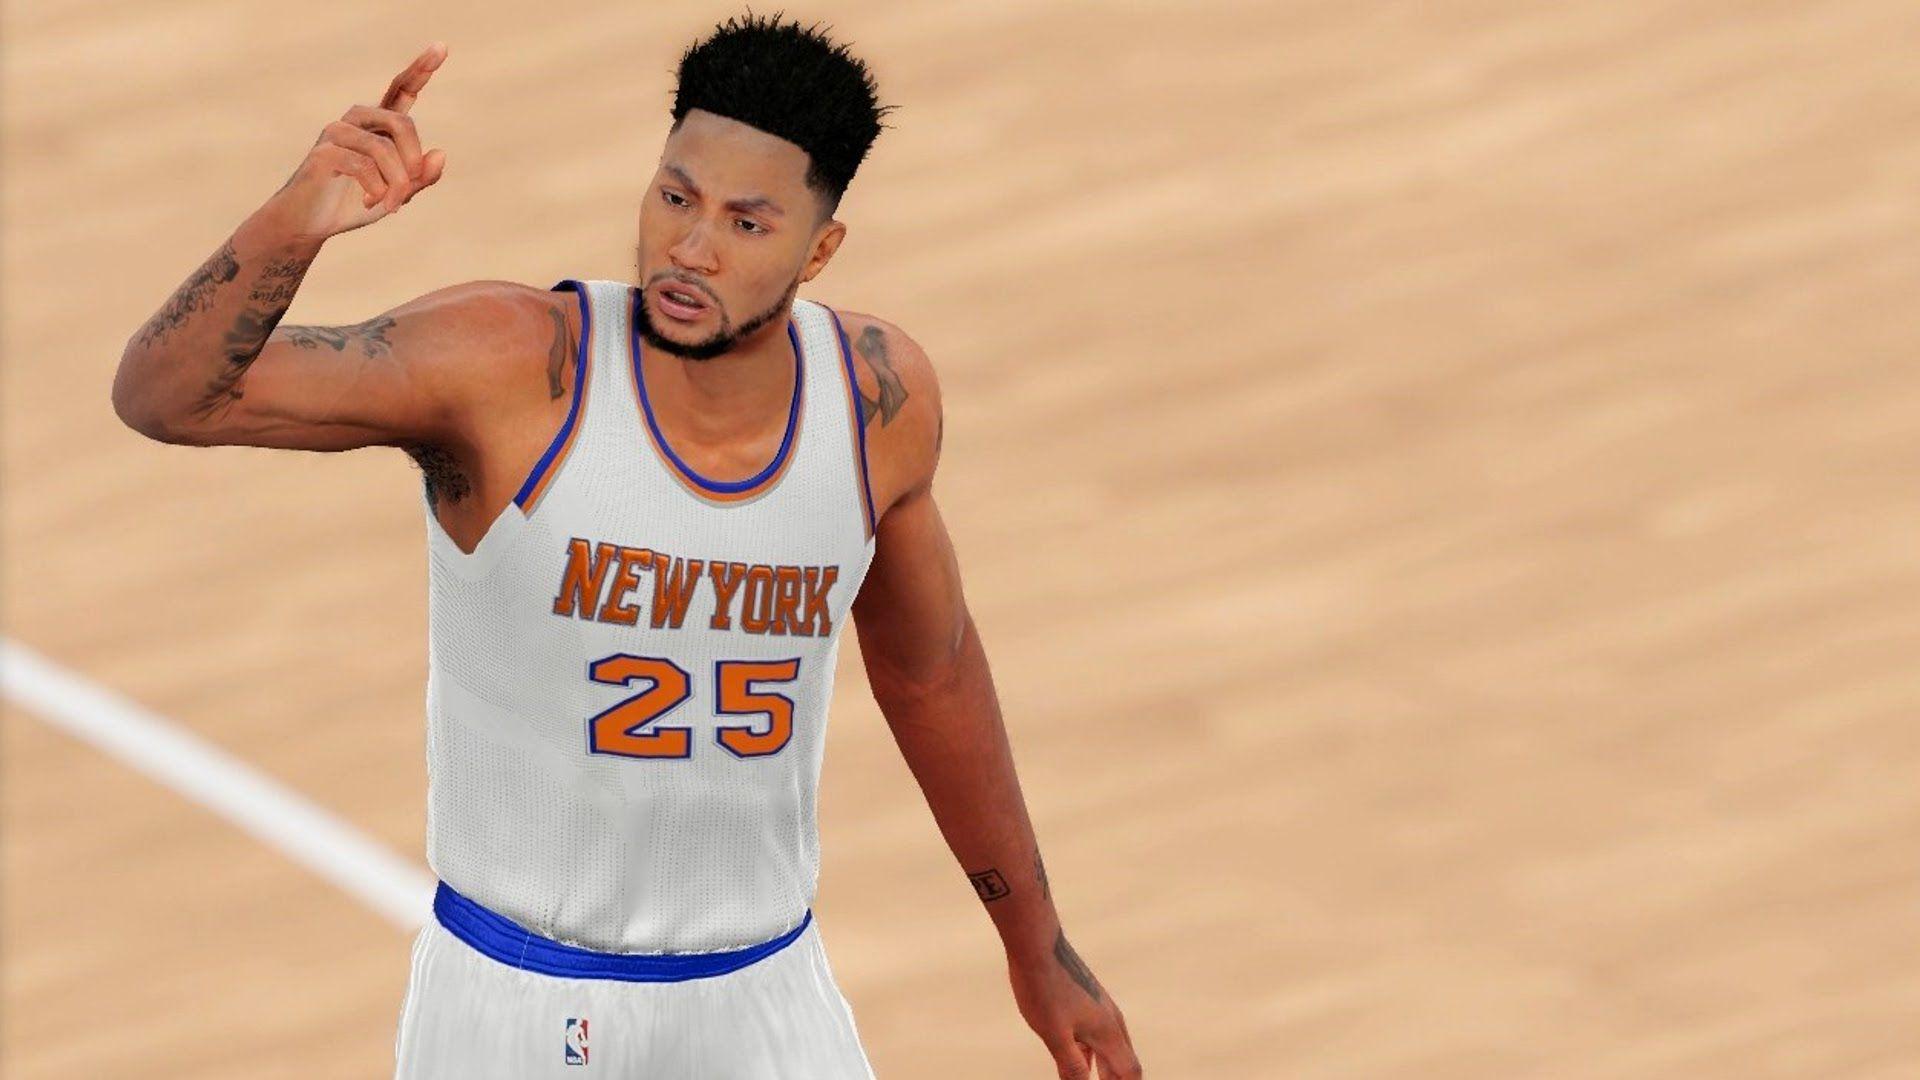 Derrick Rose Traded to the New York Knicks. NBA 2k16 vs